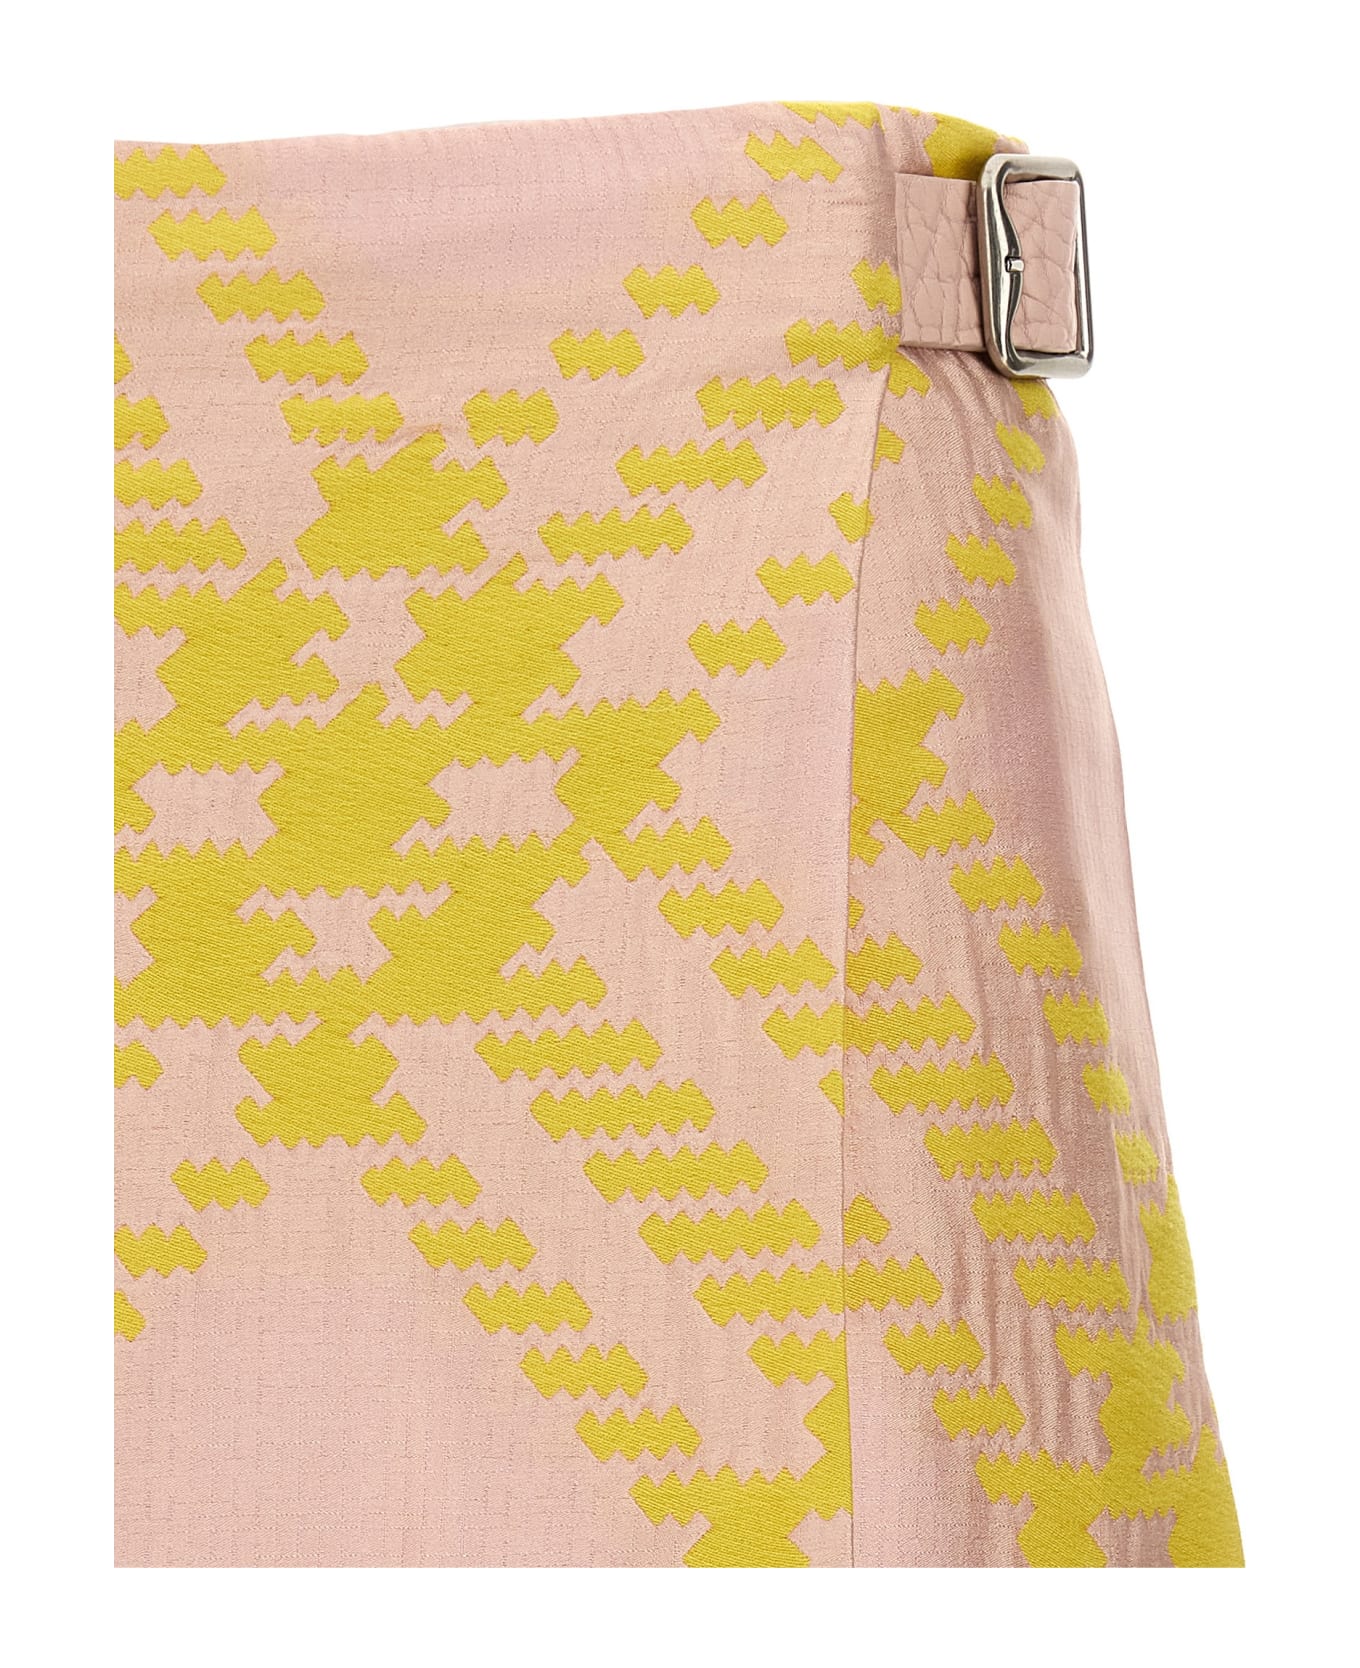 Burberry Check Skirt - Multicolor スカート